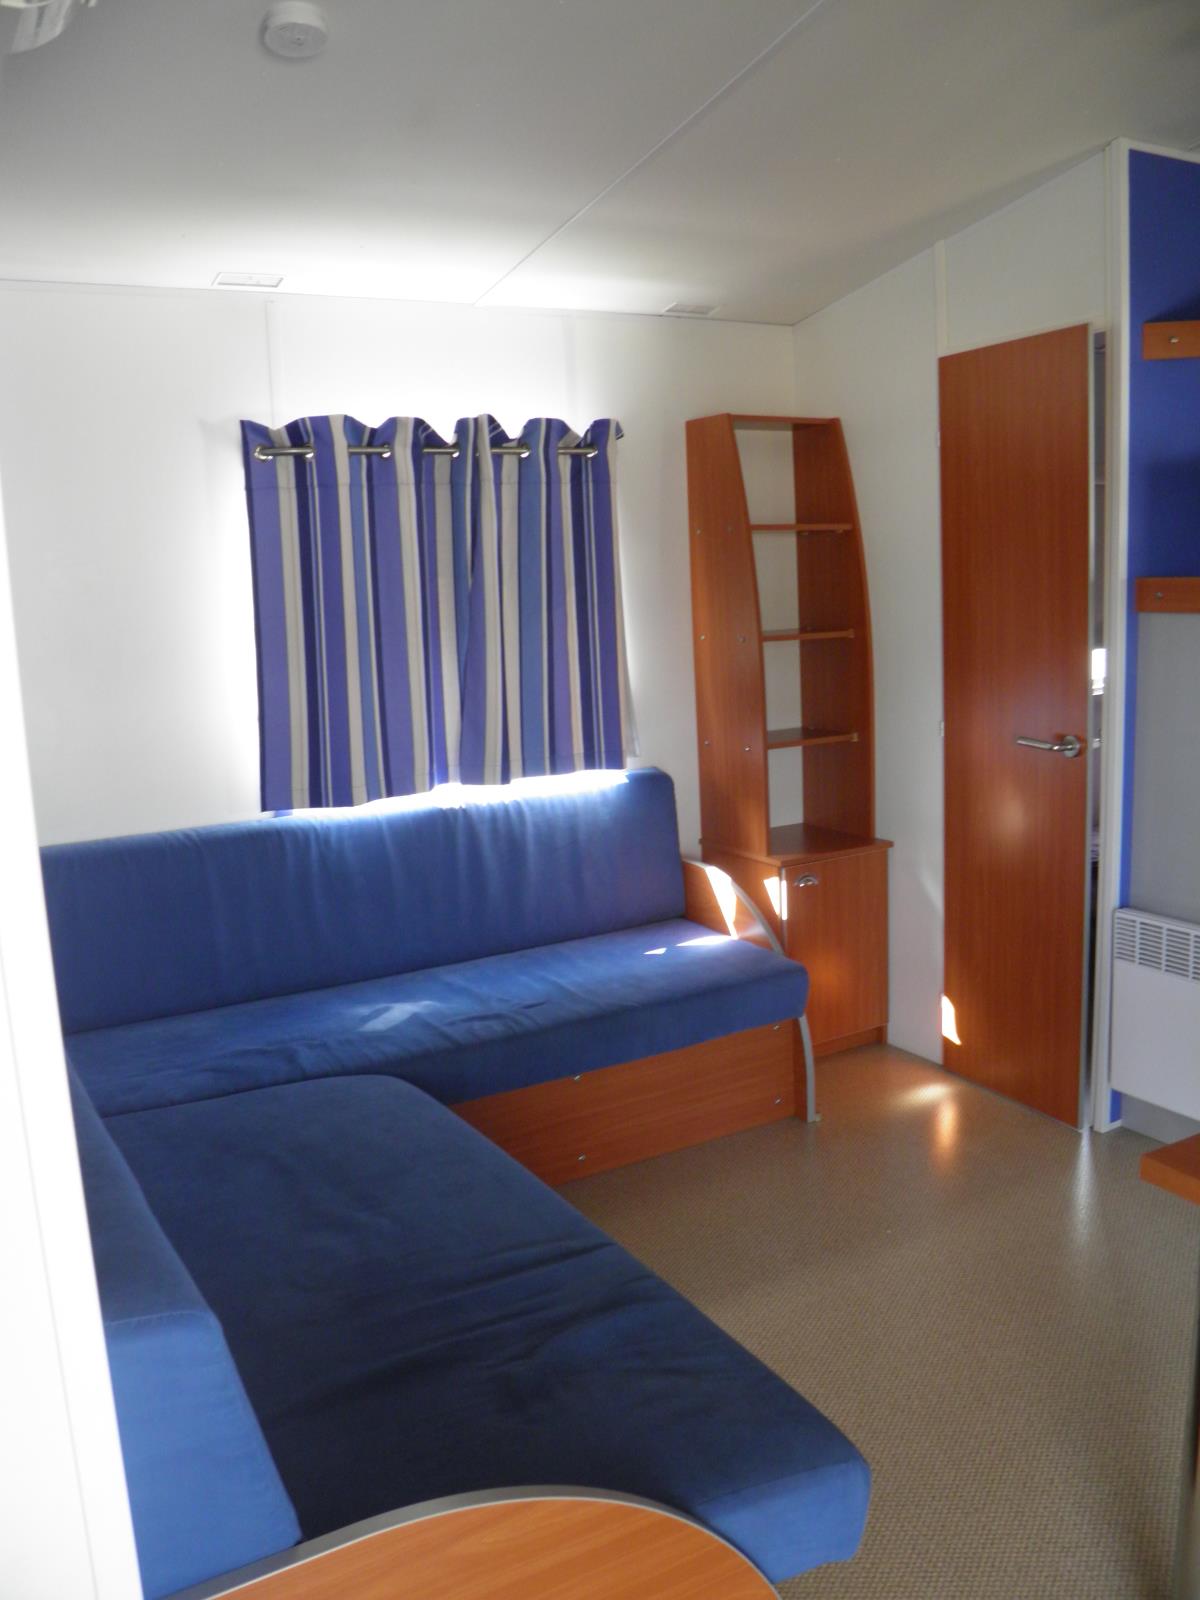 Location - Ib Mobile Home Ibie Loft Rapidhome 30M² + Climatisation 2 Chambres - Camping Le Sous-Bois